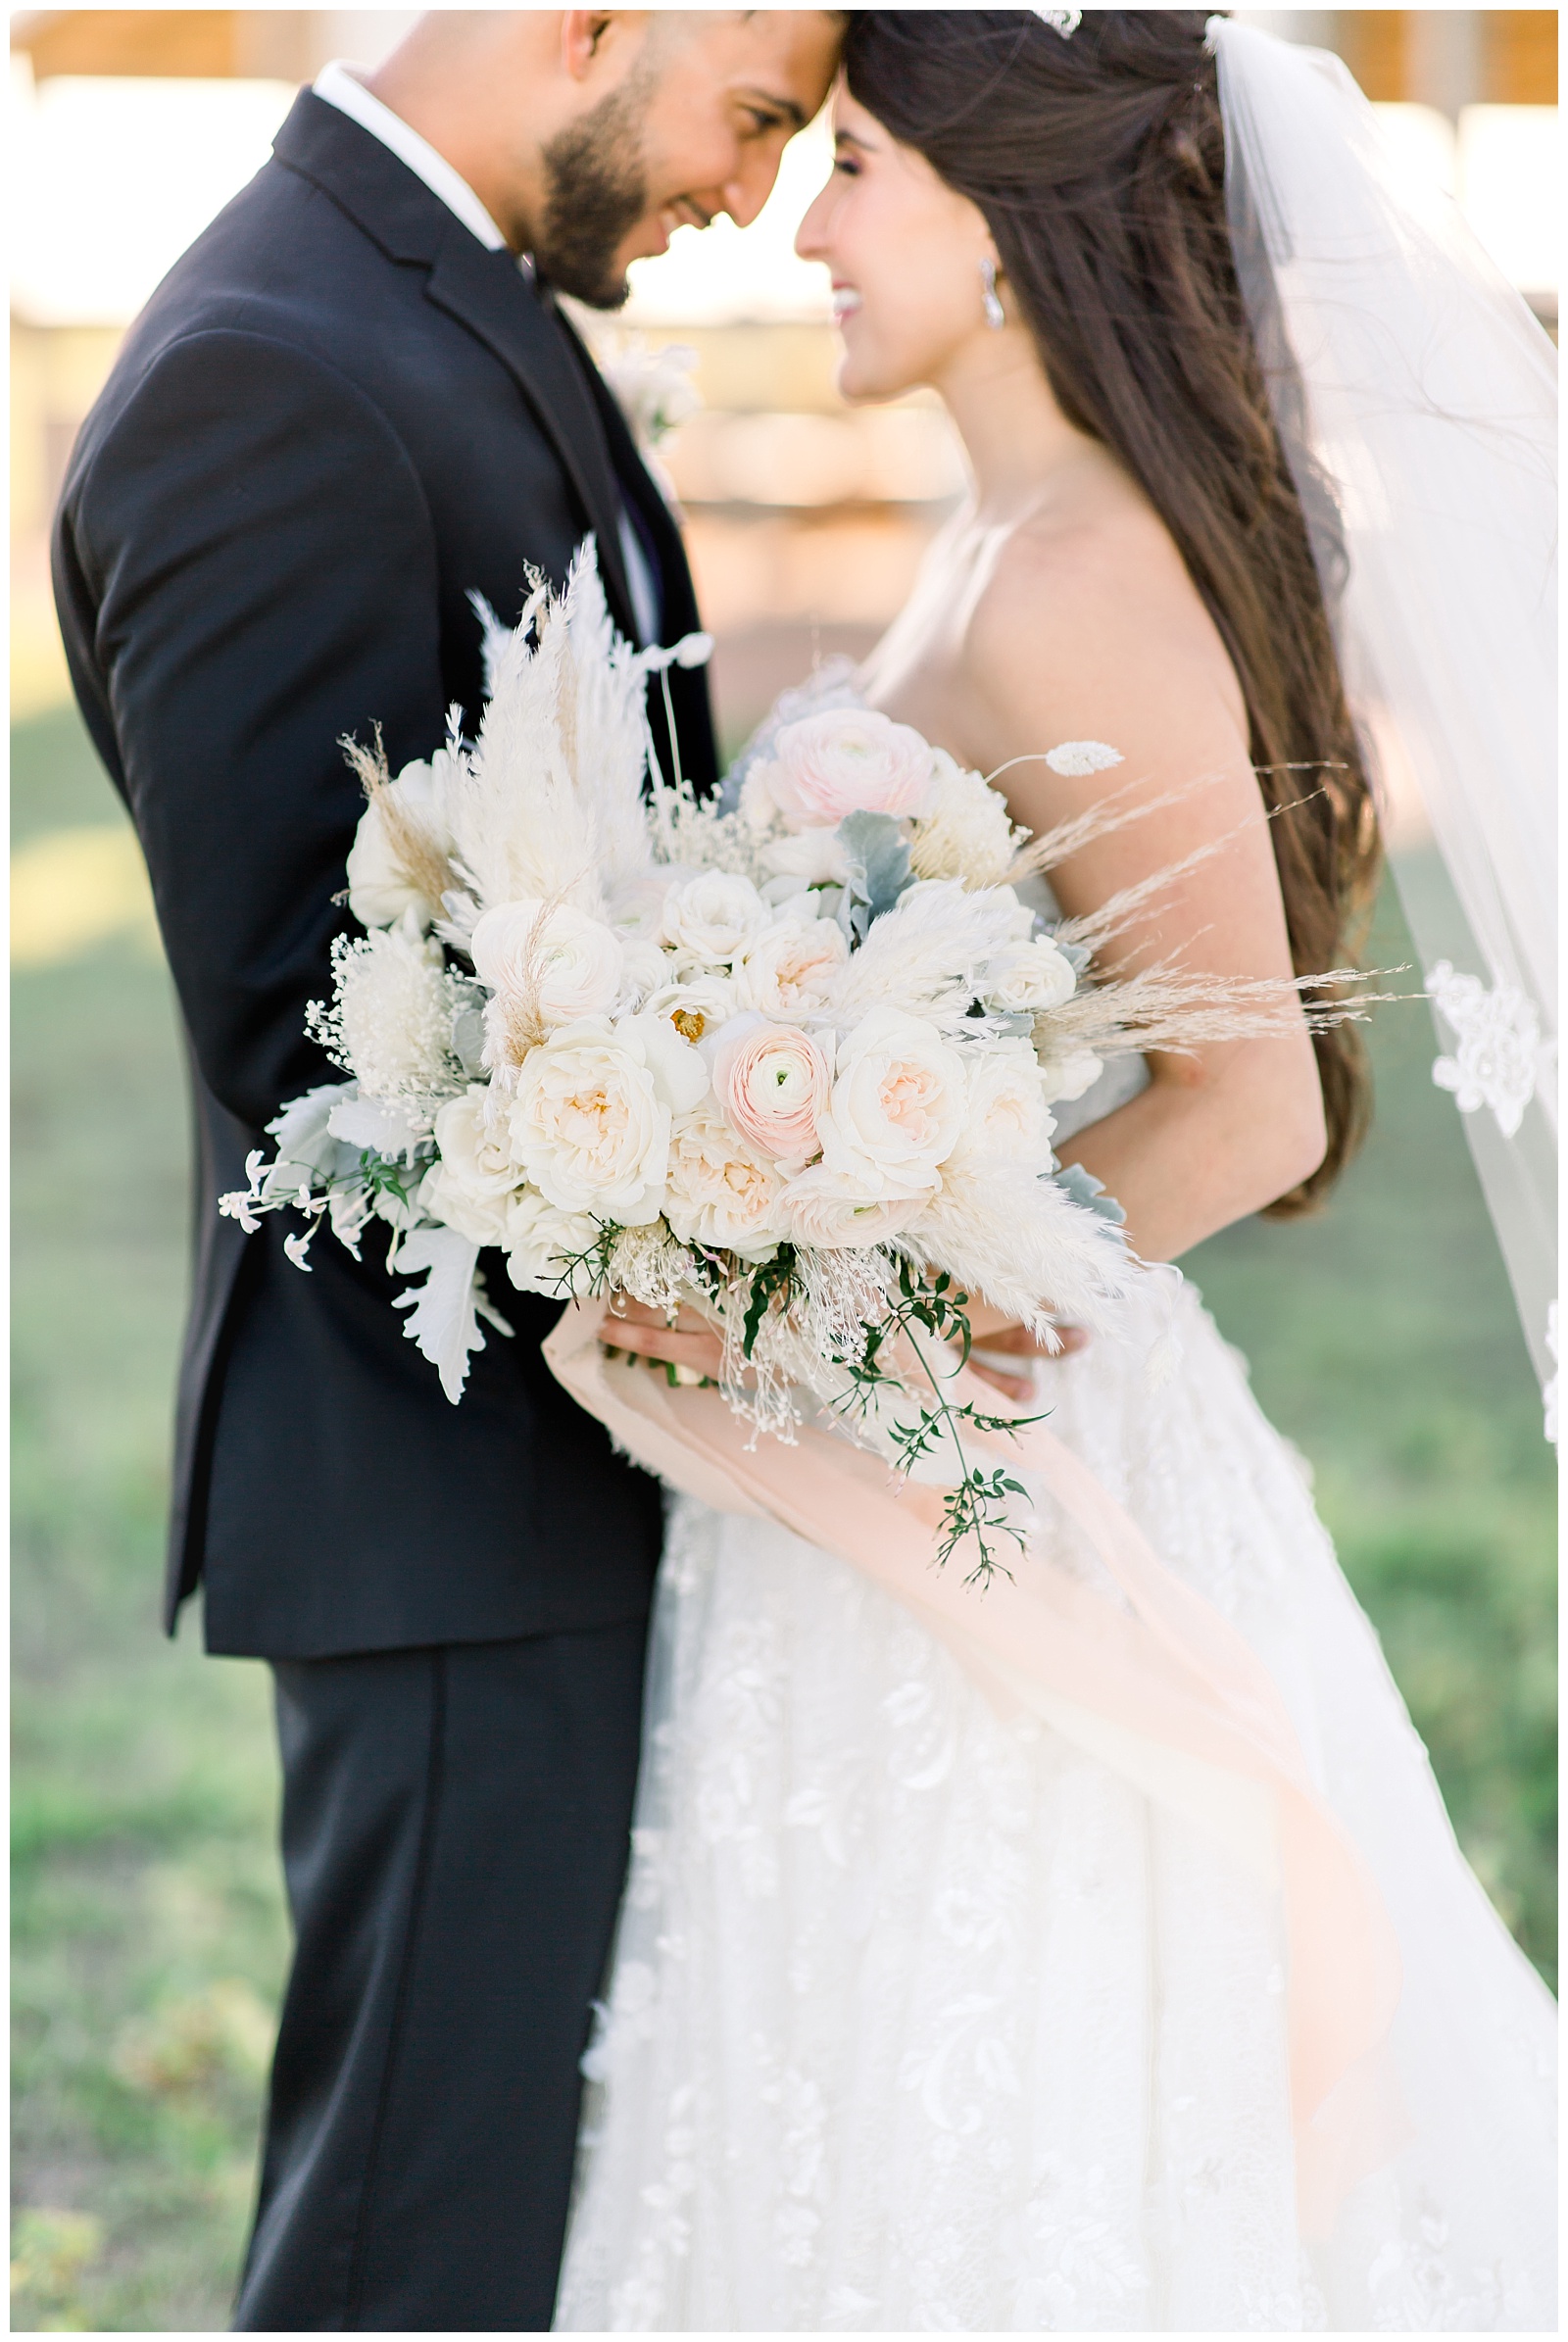 Bride and groom both hold gorgeous wedding bouquet for a Romantic Wedding at The Allen Farmhaus in New Braunfels, TX | San Antonio-Maui-Destination Wedding Photographer | Monica Roberts Photography | www.monicaroberts.com